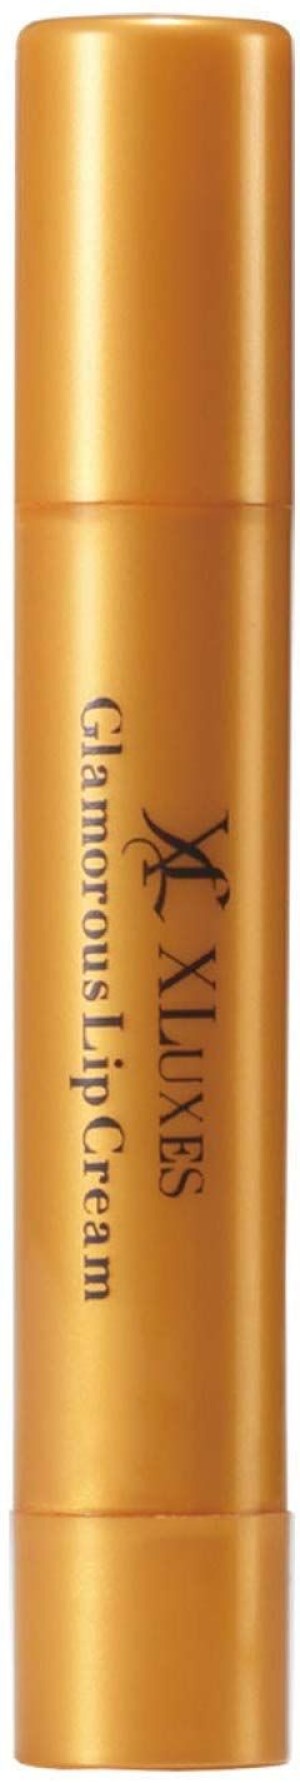 Антивозрастной крем для губ X-one XLuxes Glamorous Lip Cream